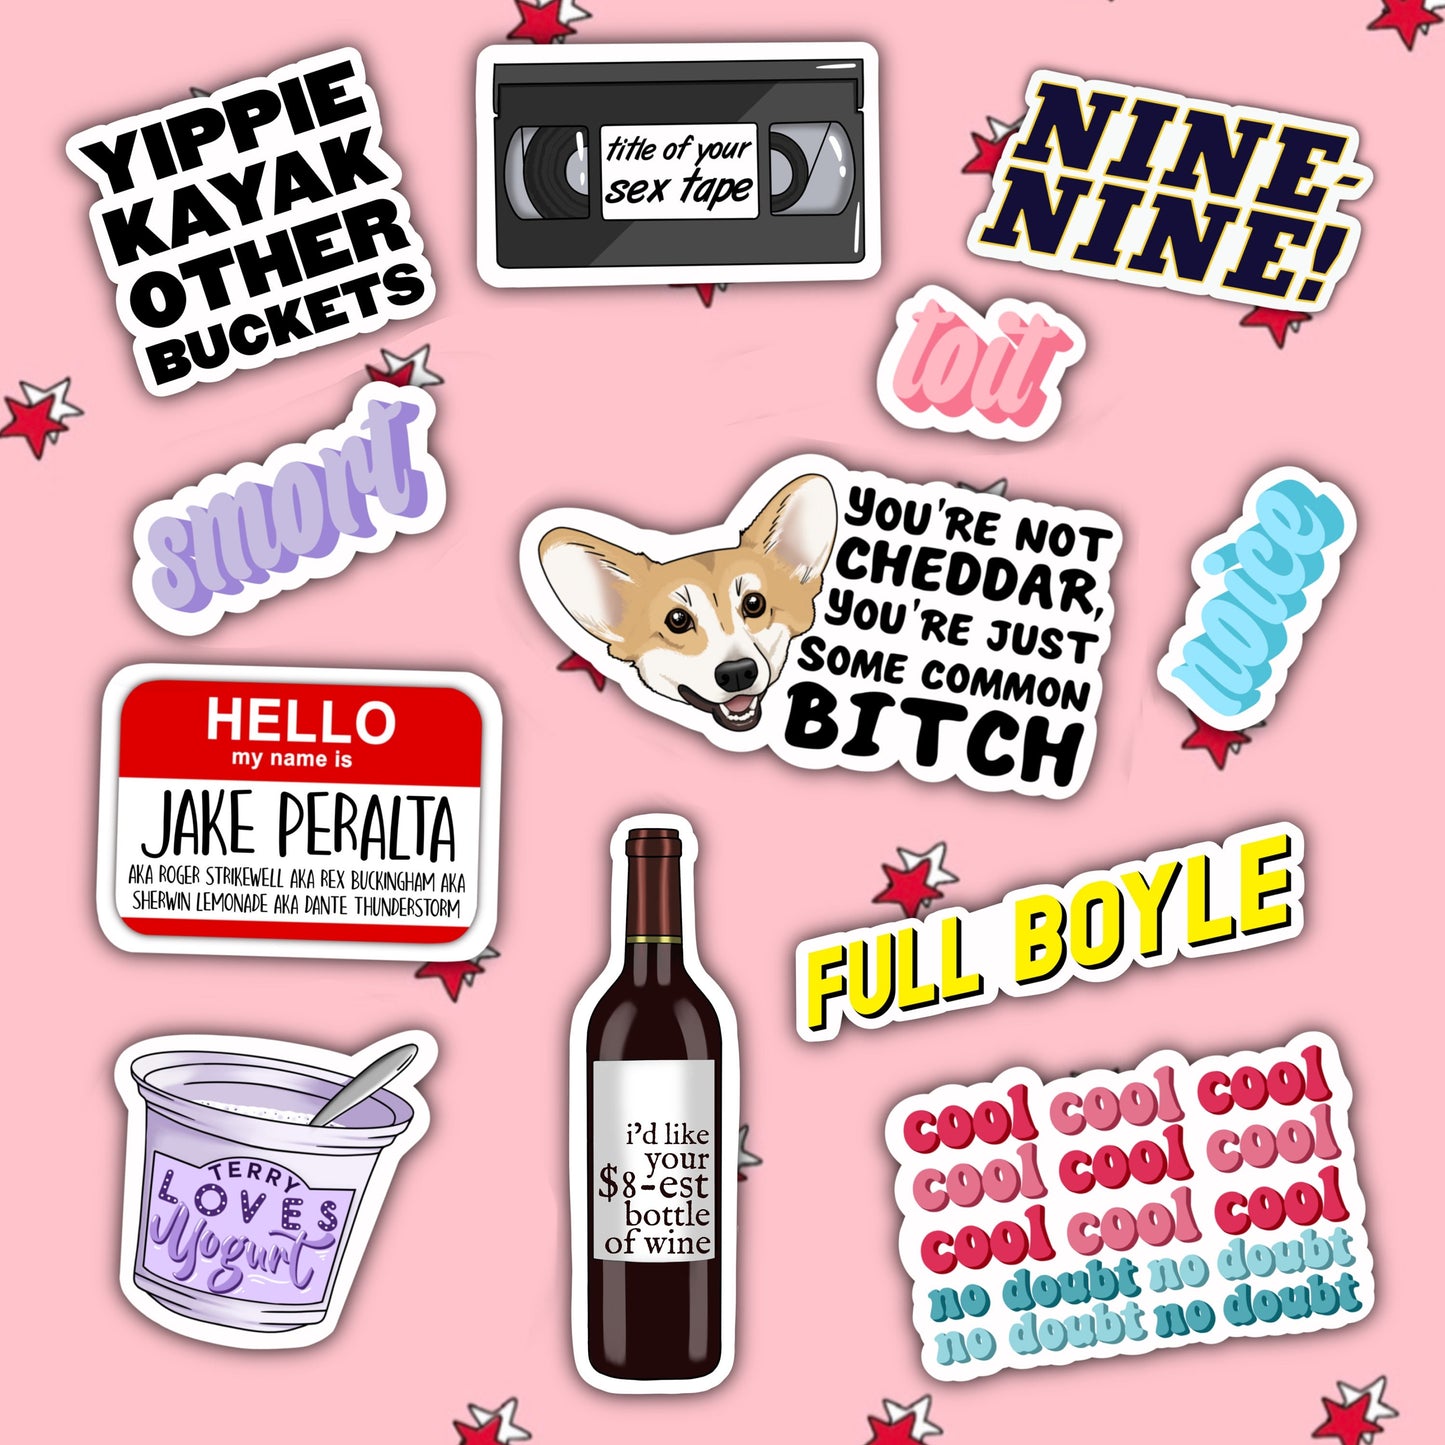 I'd Like Your 8 Dollar-est Bottle of Wine | Jake Peralta | Brooklyn 99 Stickers